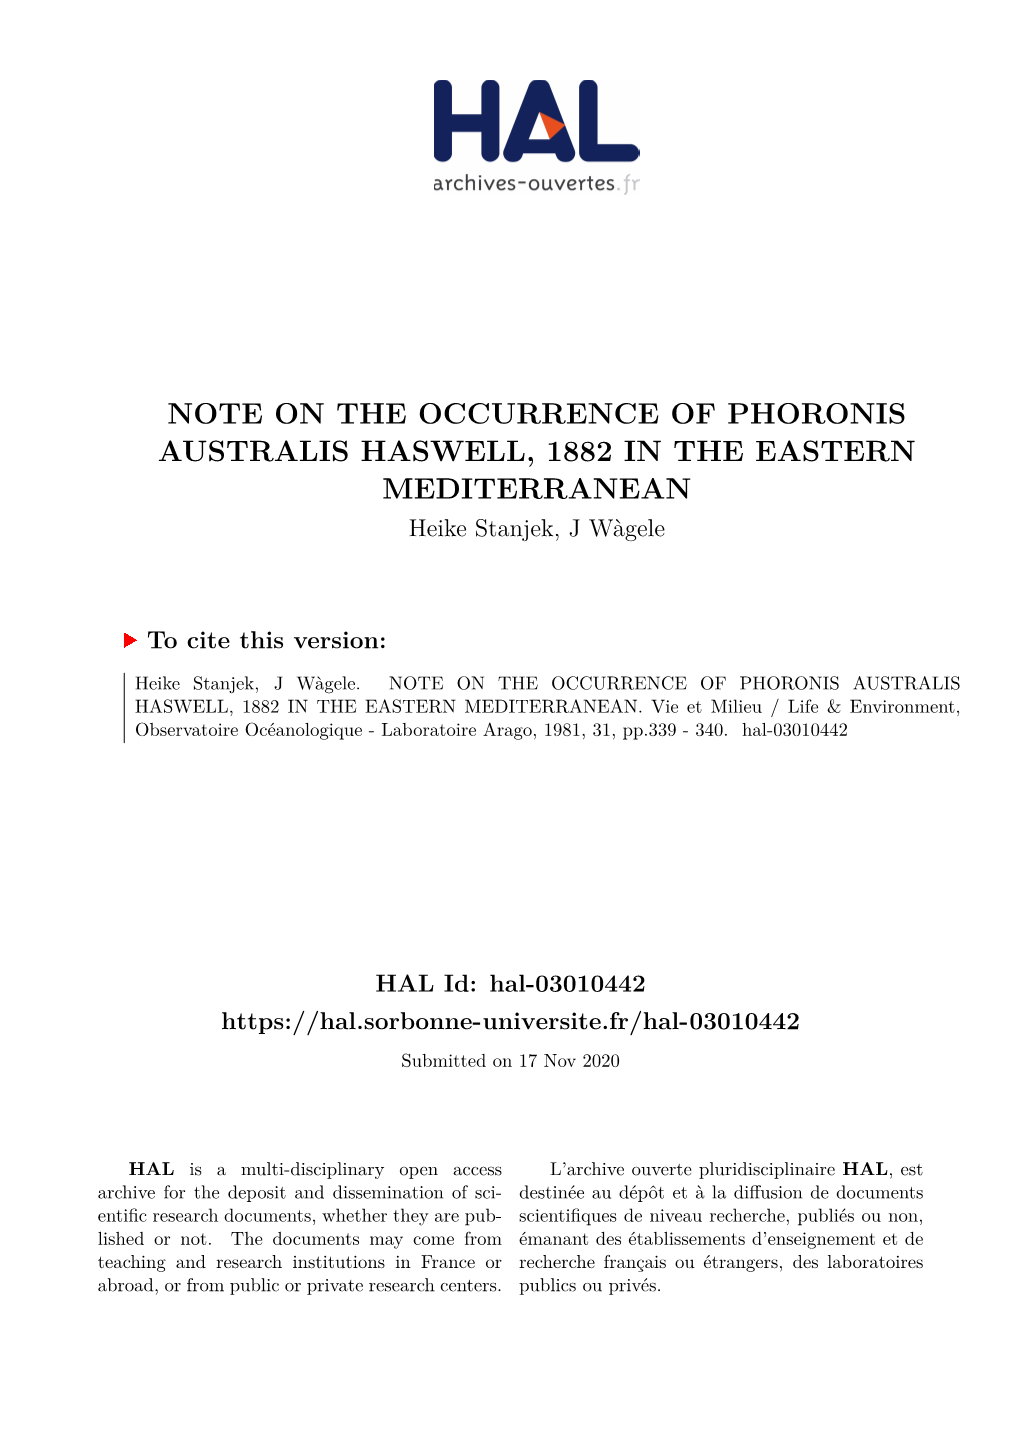 NOTE on the OCCURRENCE of PHORONIS AUSTRALIS HASWELL, 1882 in the EASTERN MEDITERRANEAN Heike Stanjek, J Wàgele